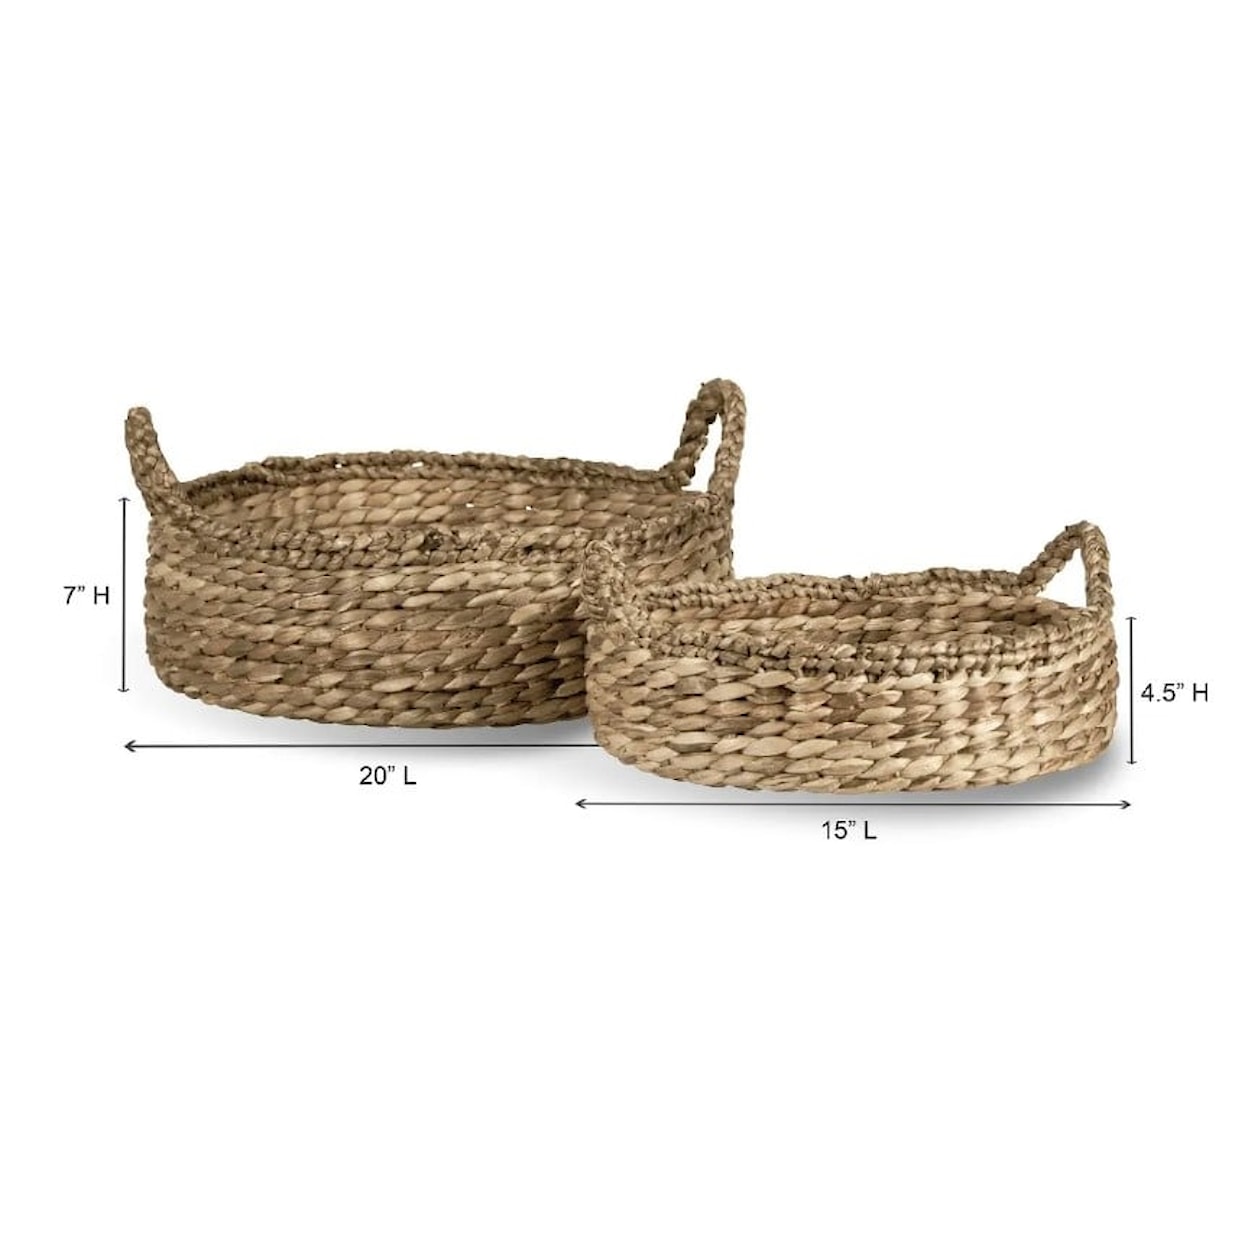 Ibolili Baskets and Sets BRAIDED WATER HYACINTH TRAY, RND- S/2